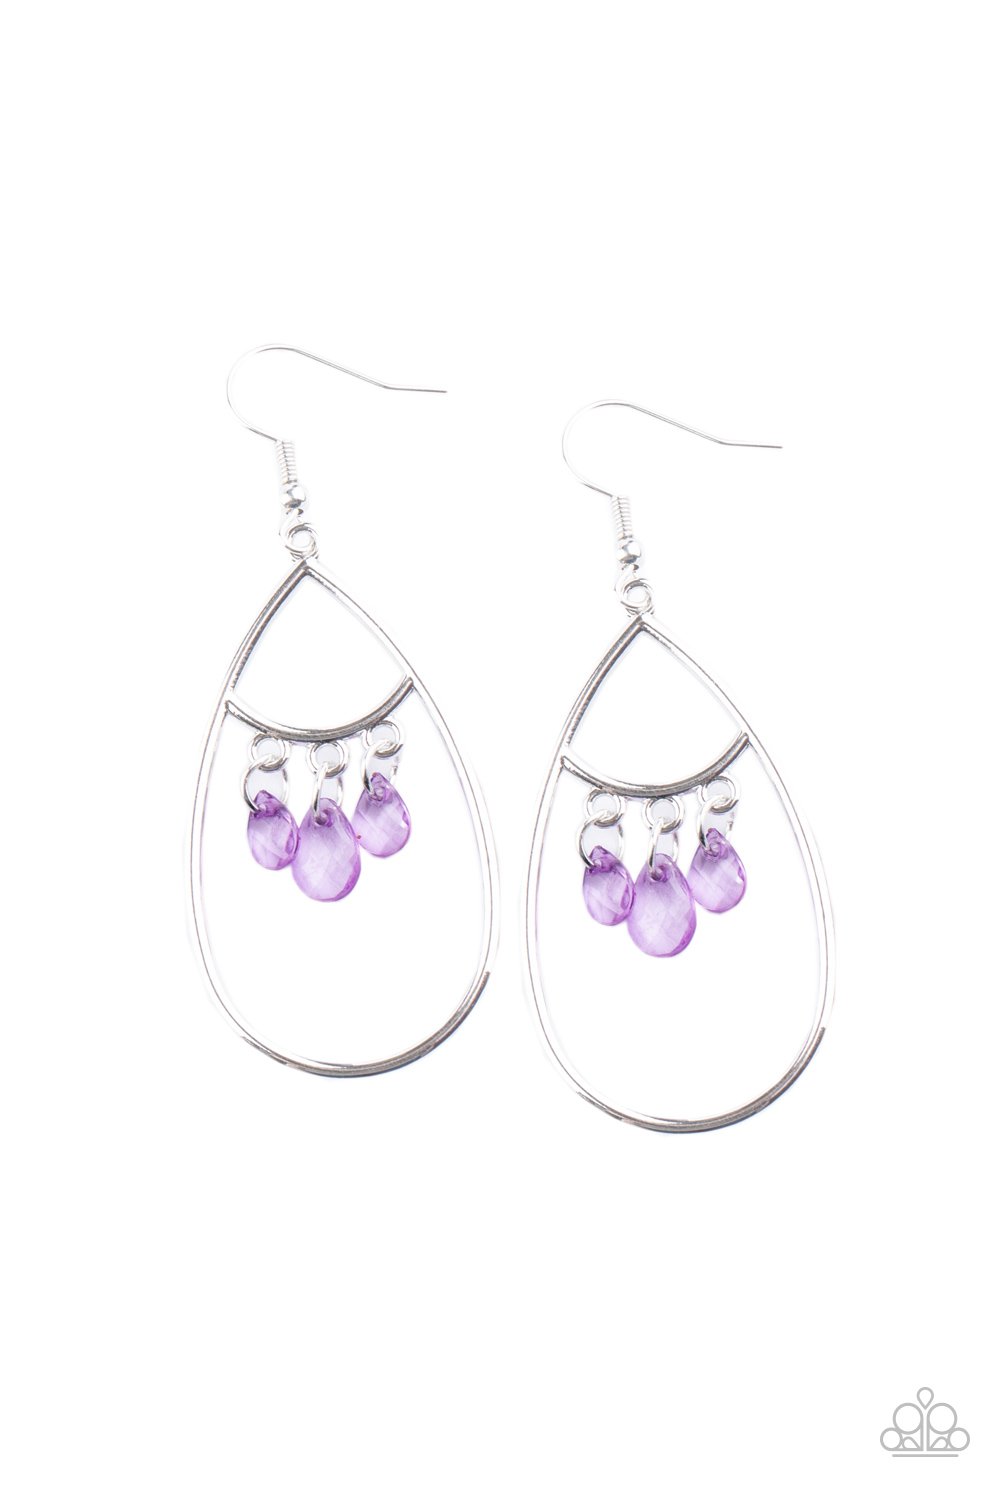 Shimmer Advisory - Purple Earrings freeshipping - JewLz4u Gemstone Gallery